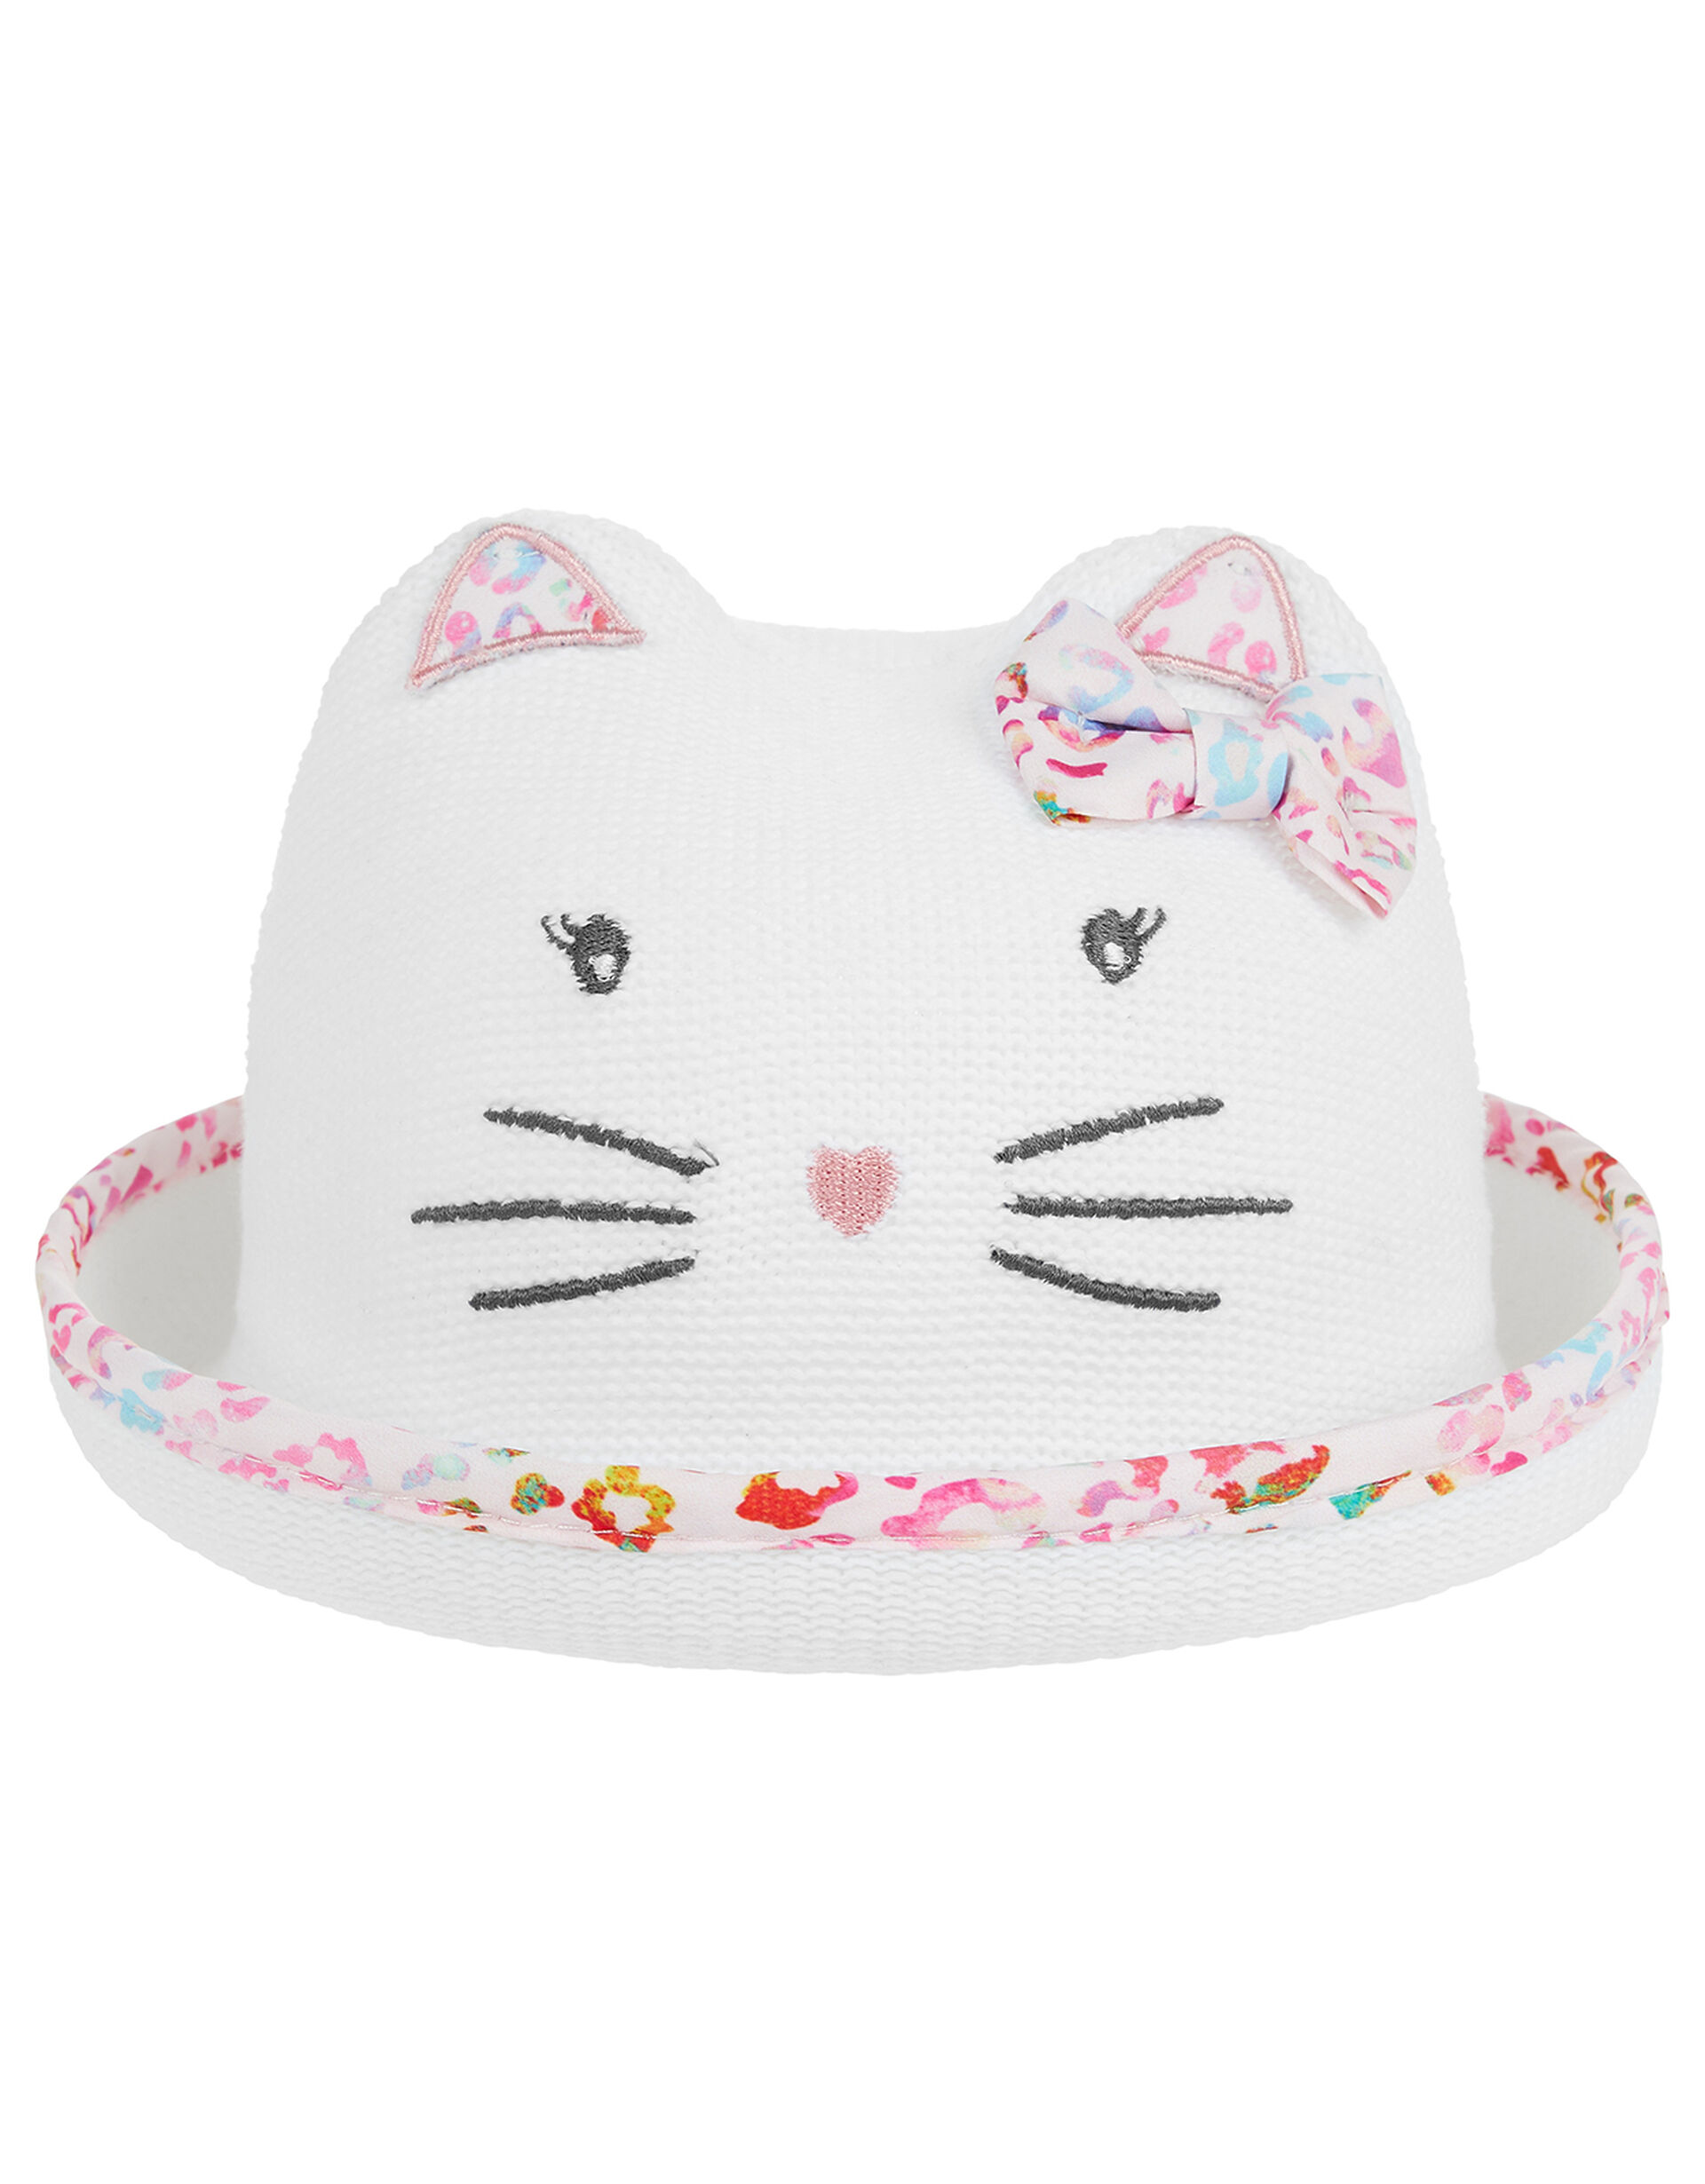 Baby Debbie Kitty Bowler Hat in Organic Cotton, Multi (MULTI), large